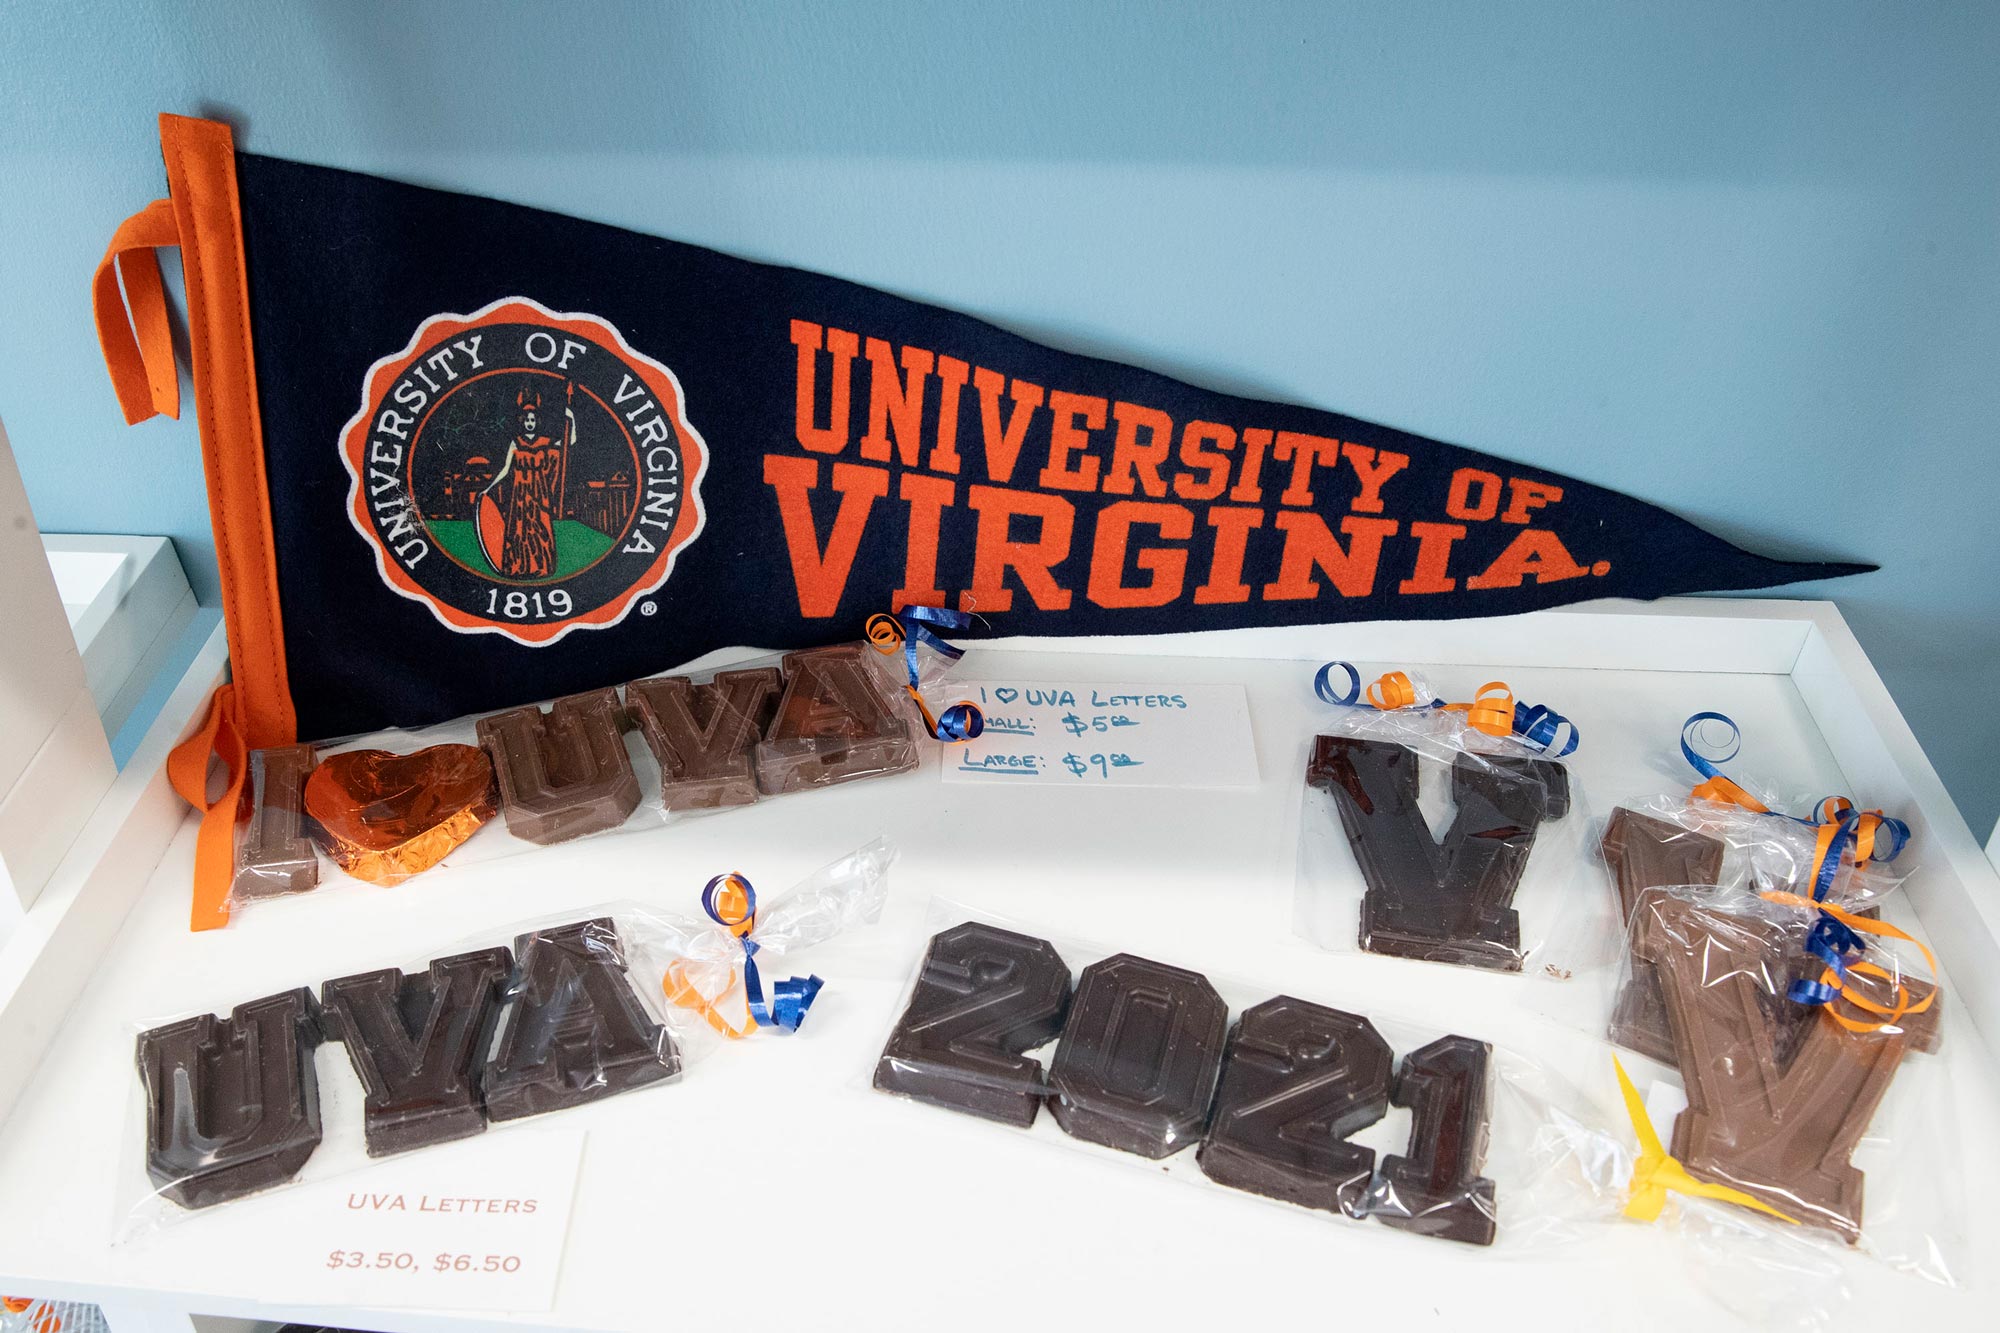 Chocolatesville Graduation chocolates.  Chocolates say: UVA, 2021, UVA V and displayed is a UVA pennant flag